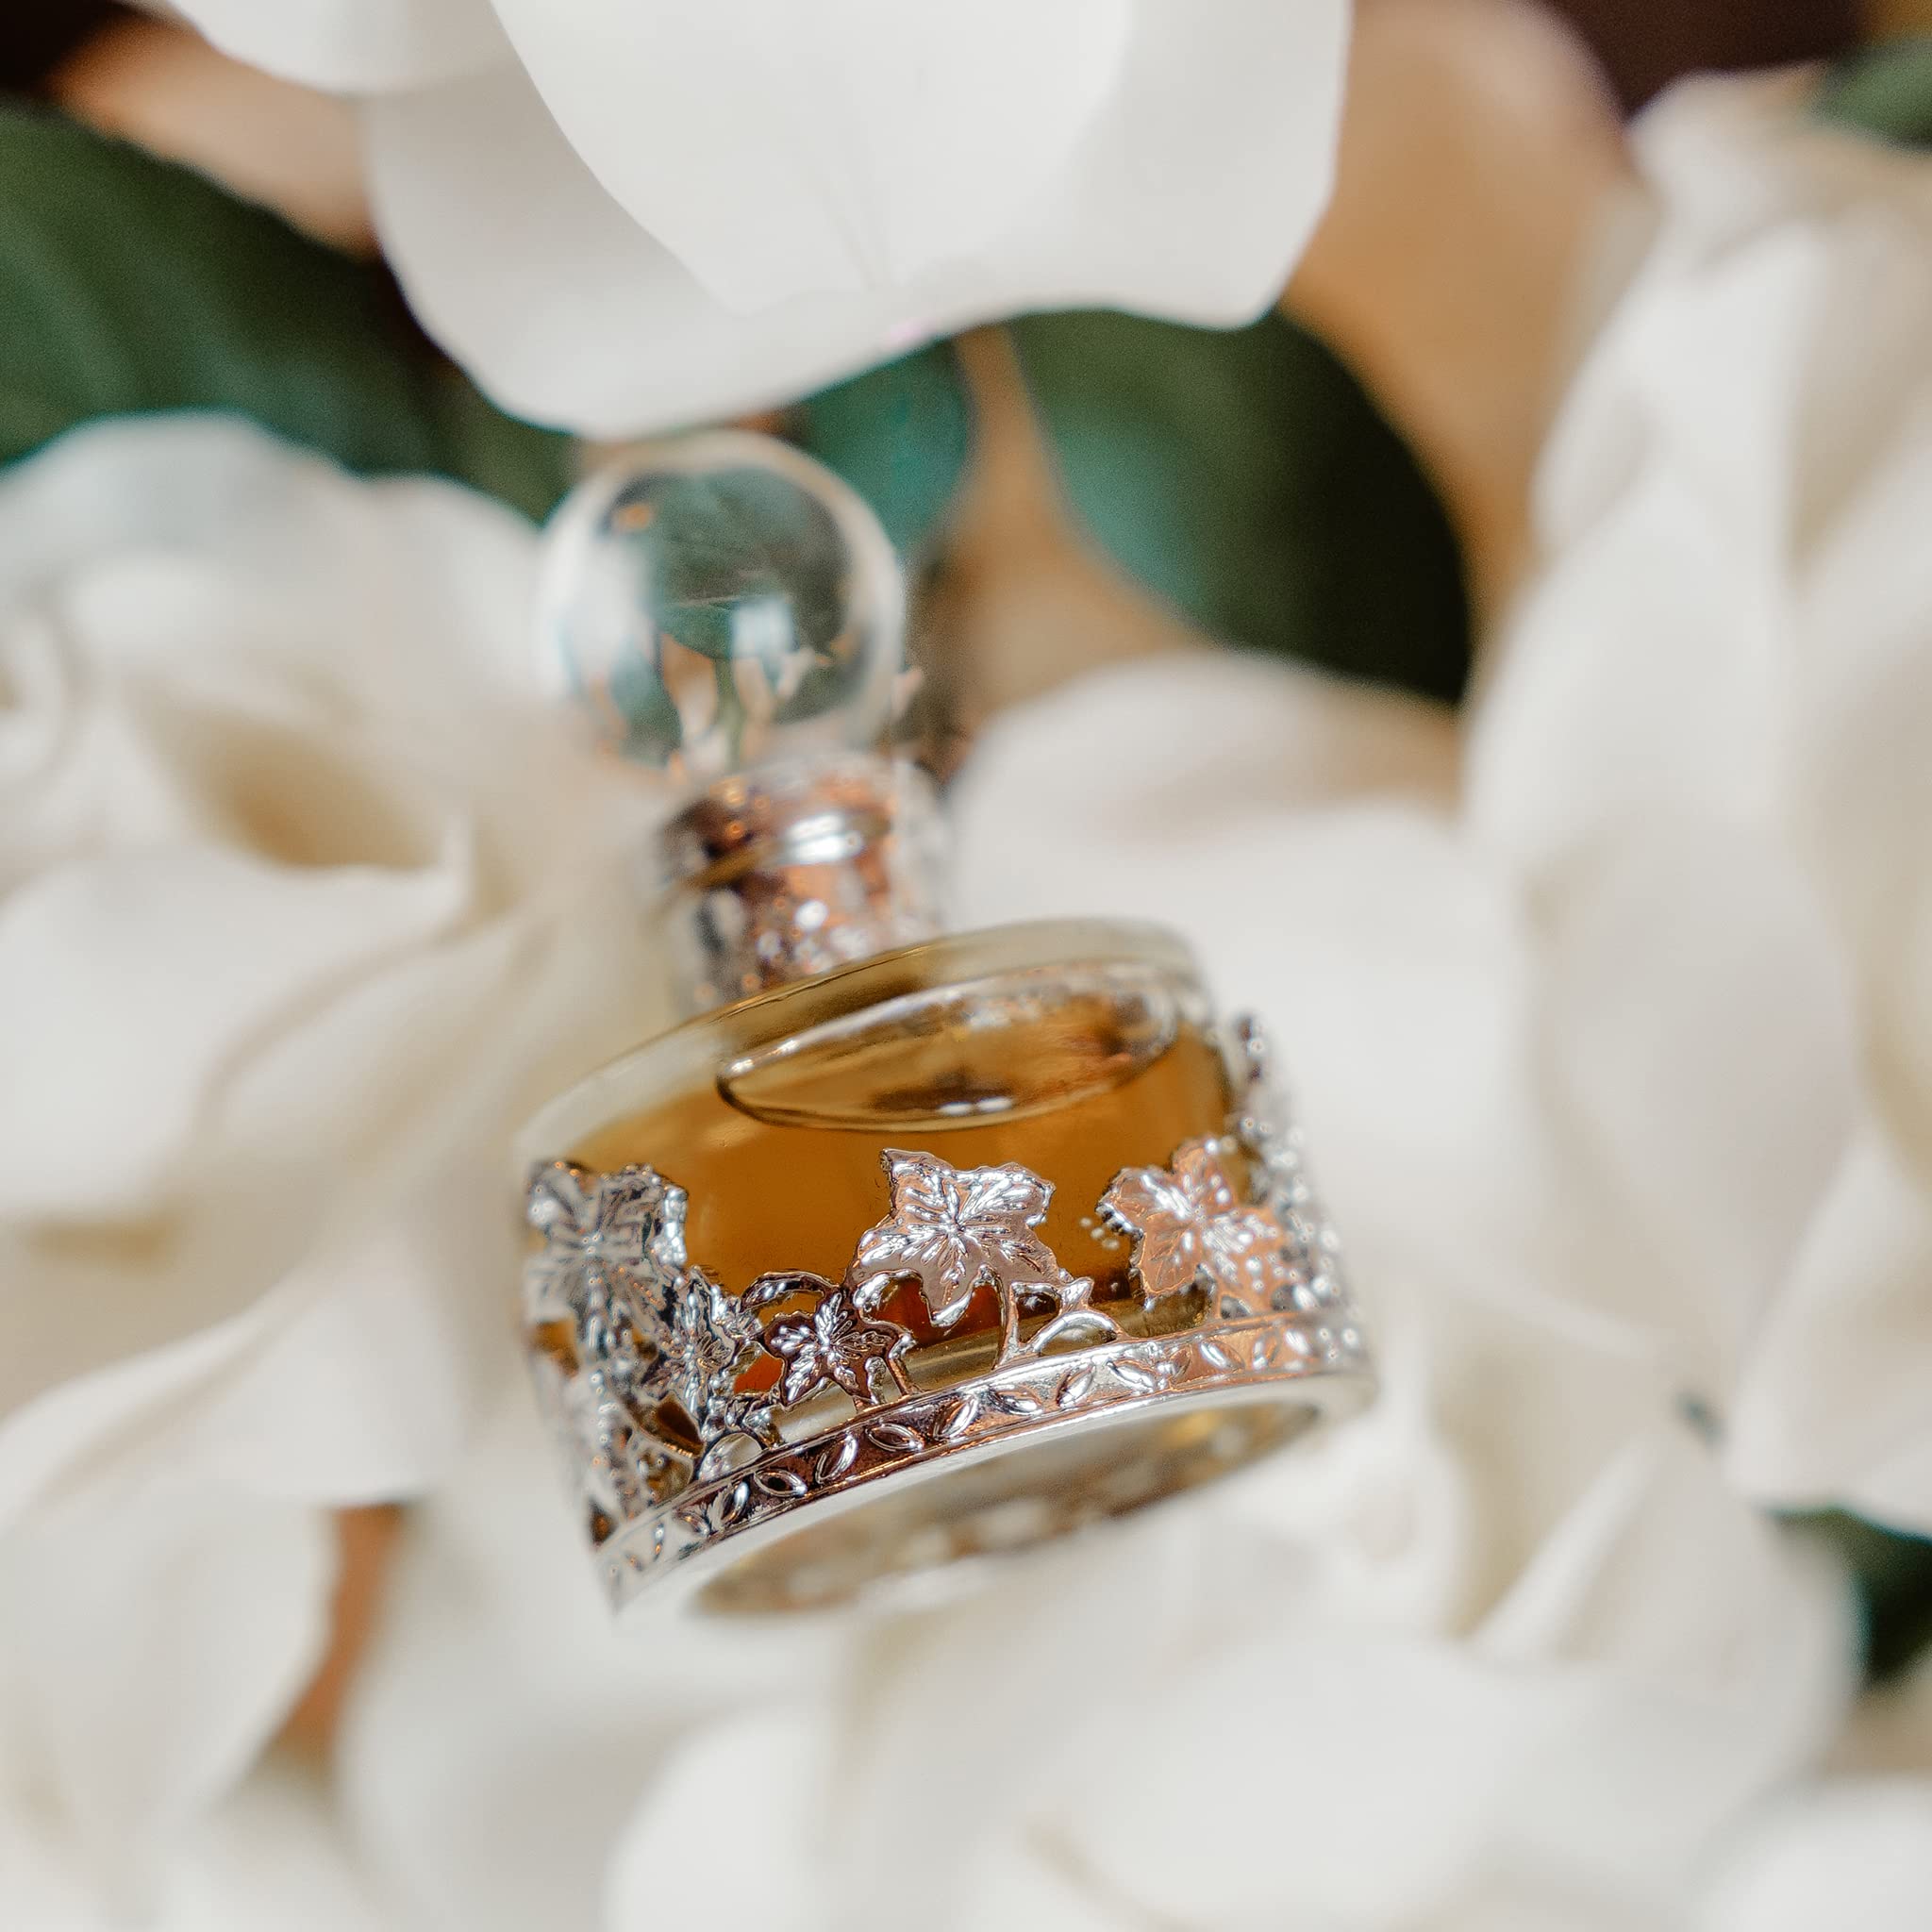 Swiss Arabian Rose Malaki - Luxury Products From Dubai - Long Lasting And Addictive Personal Perfume Oil Fragrance - A Seductive, Signature Aroma - The Luxurious Scent Of Arabia - 1 Oz